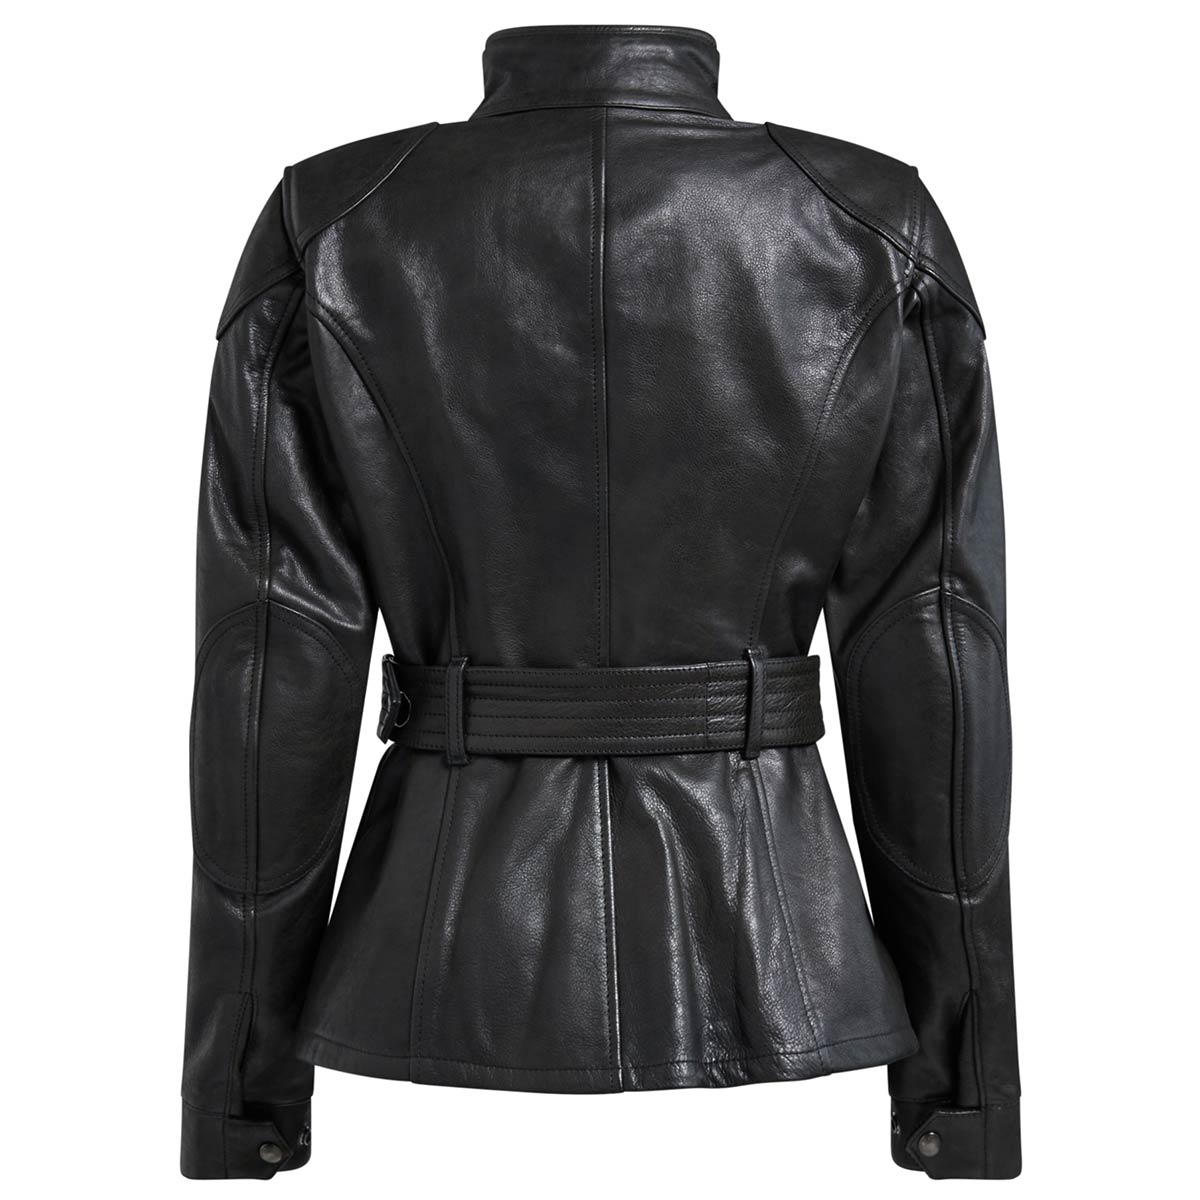 BELSTAFF Trialmaster Pro Ladies Leather Jacket - Antique Black